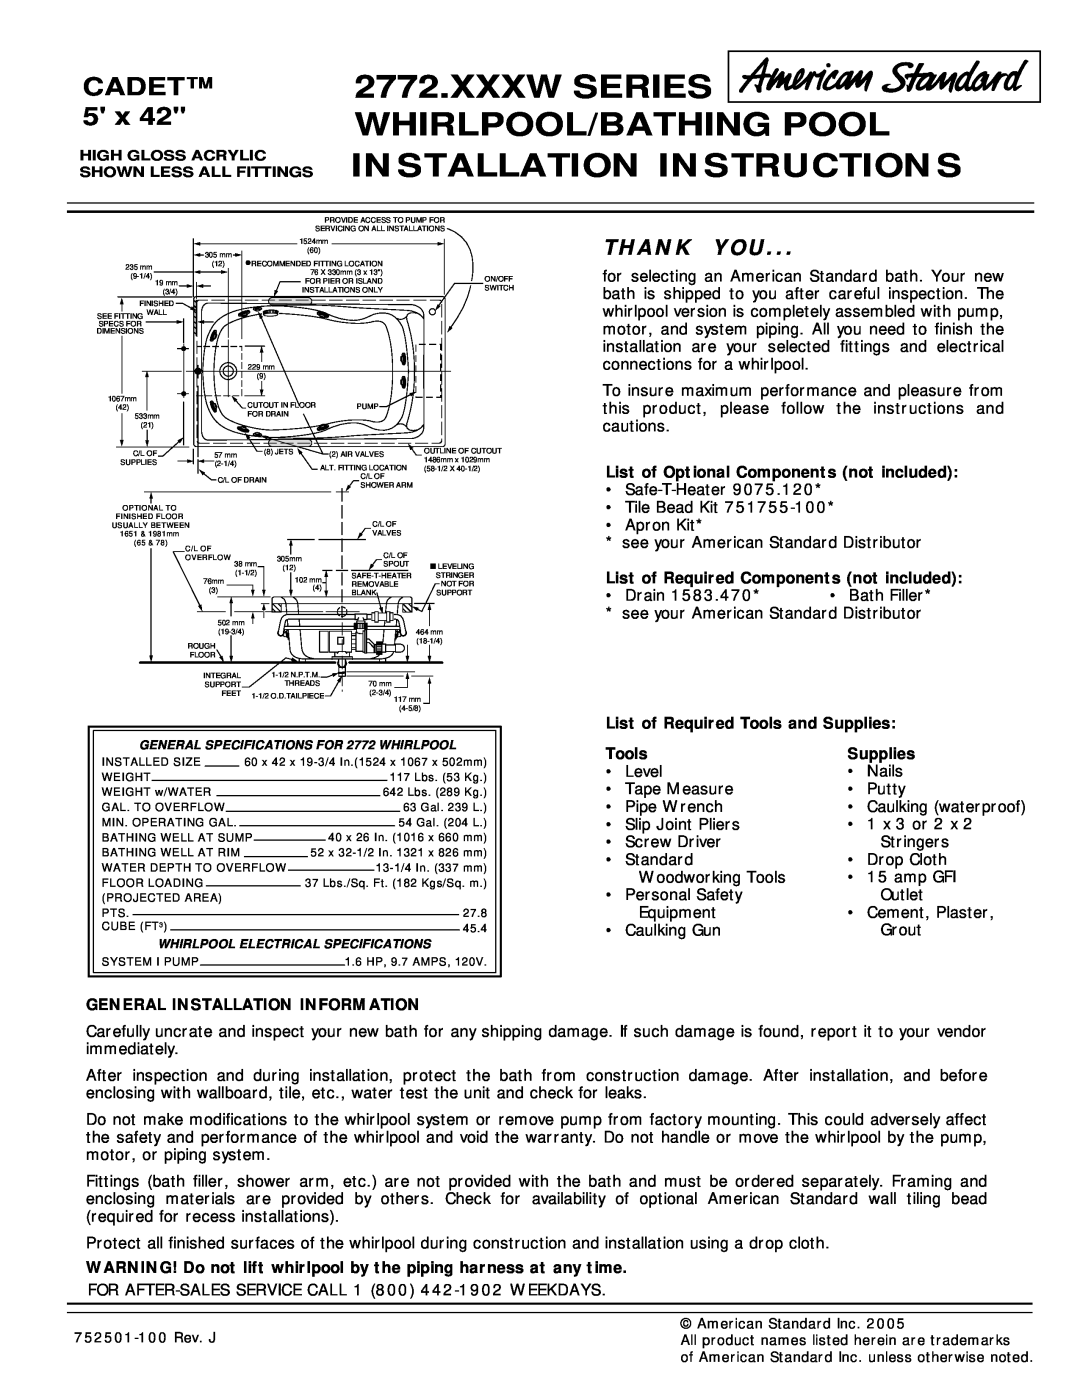 American Standard 2772.XXXW installation instructions Xxxw Series Whirlpool/Bathing Pool, Installation Instructions, Cadet 